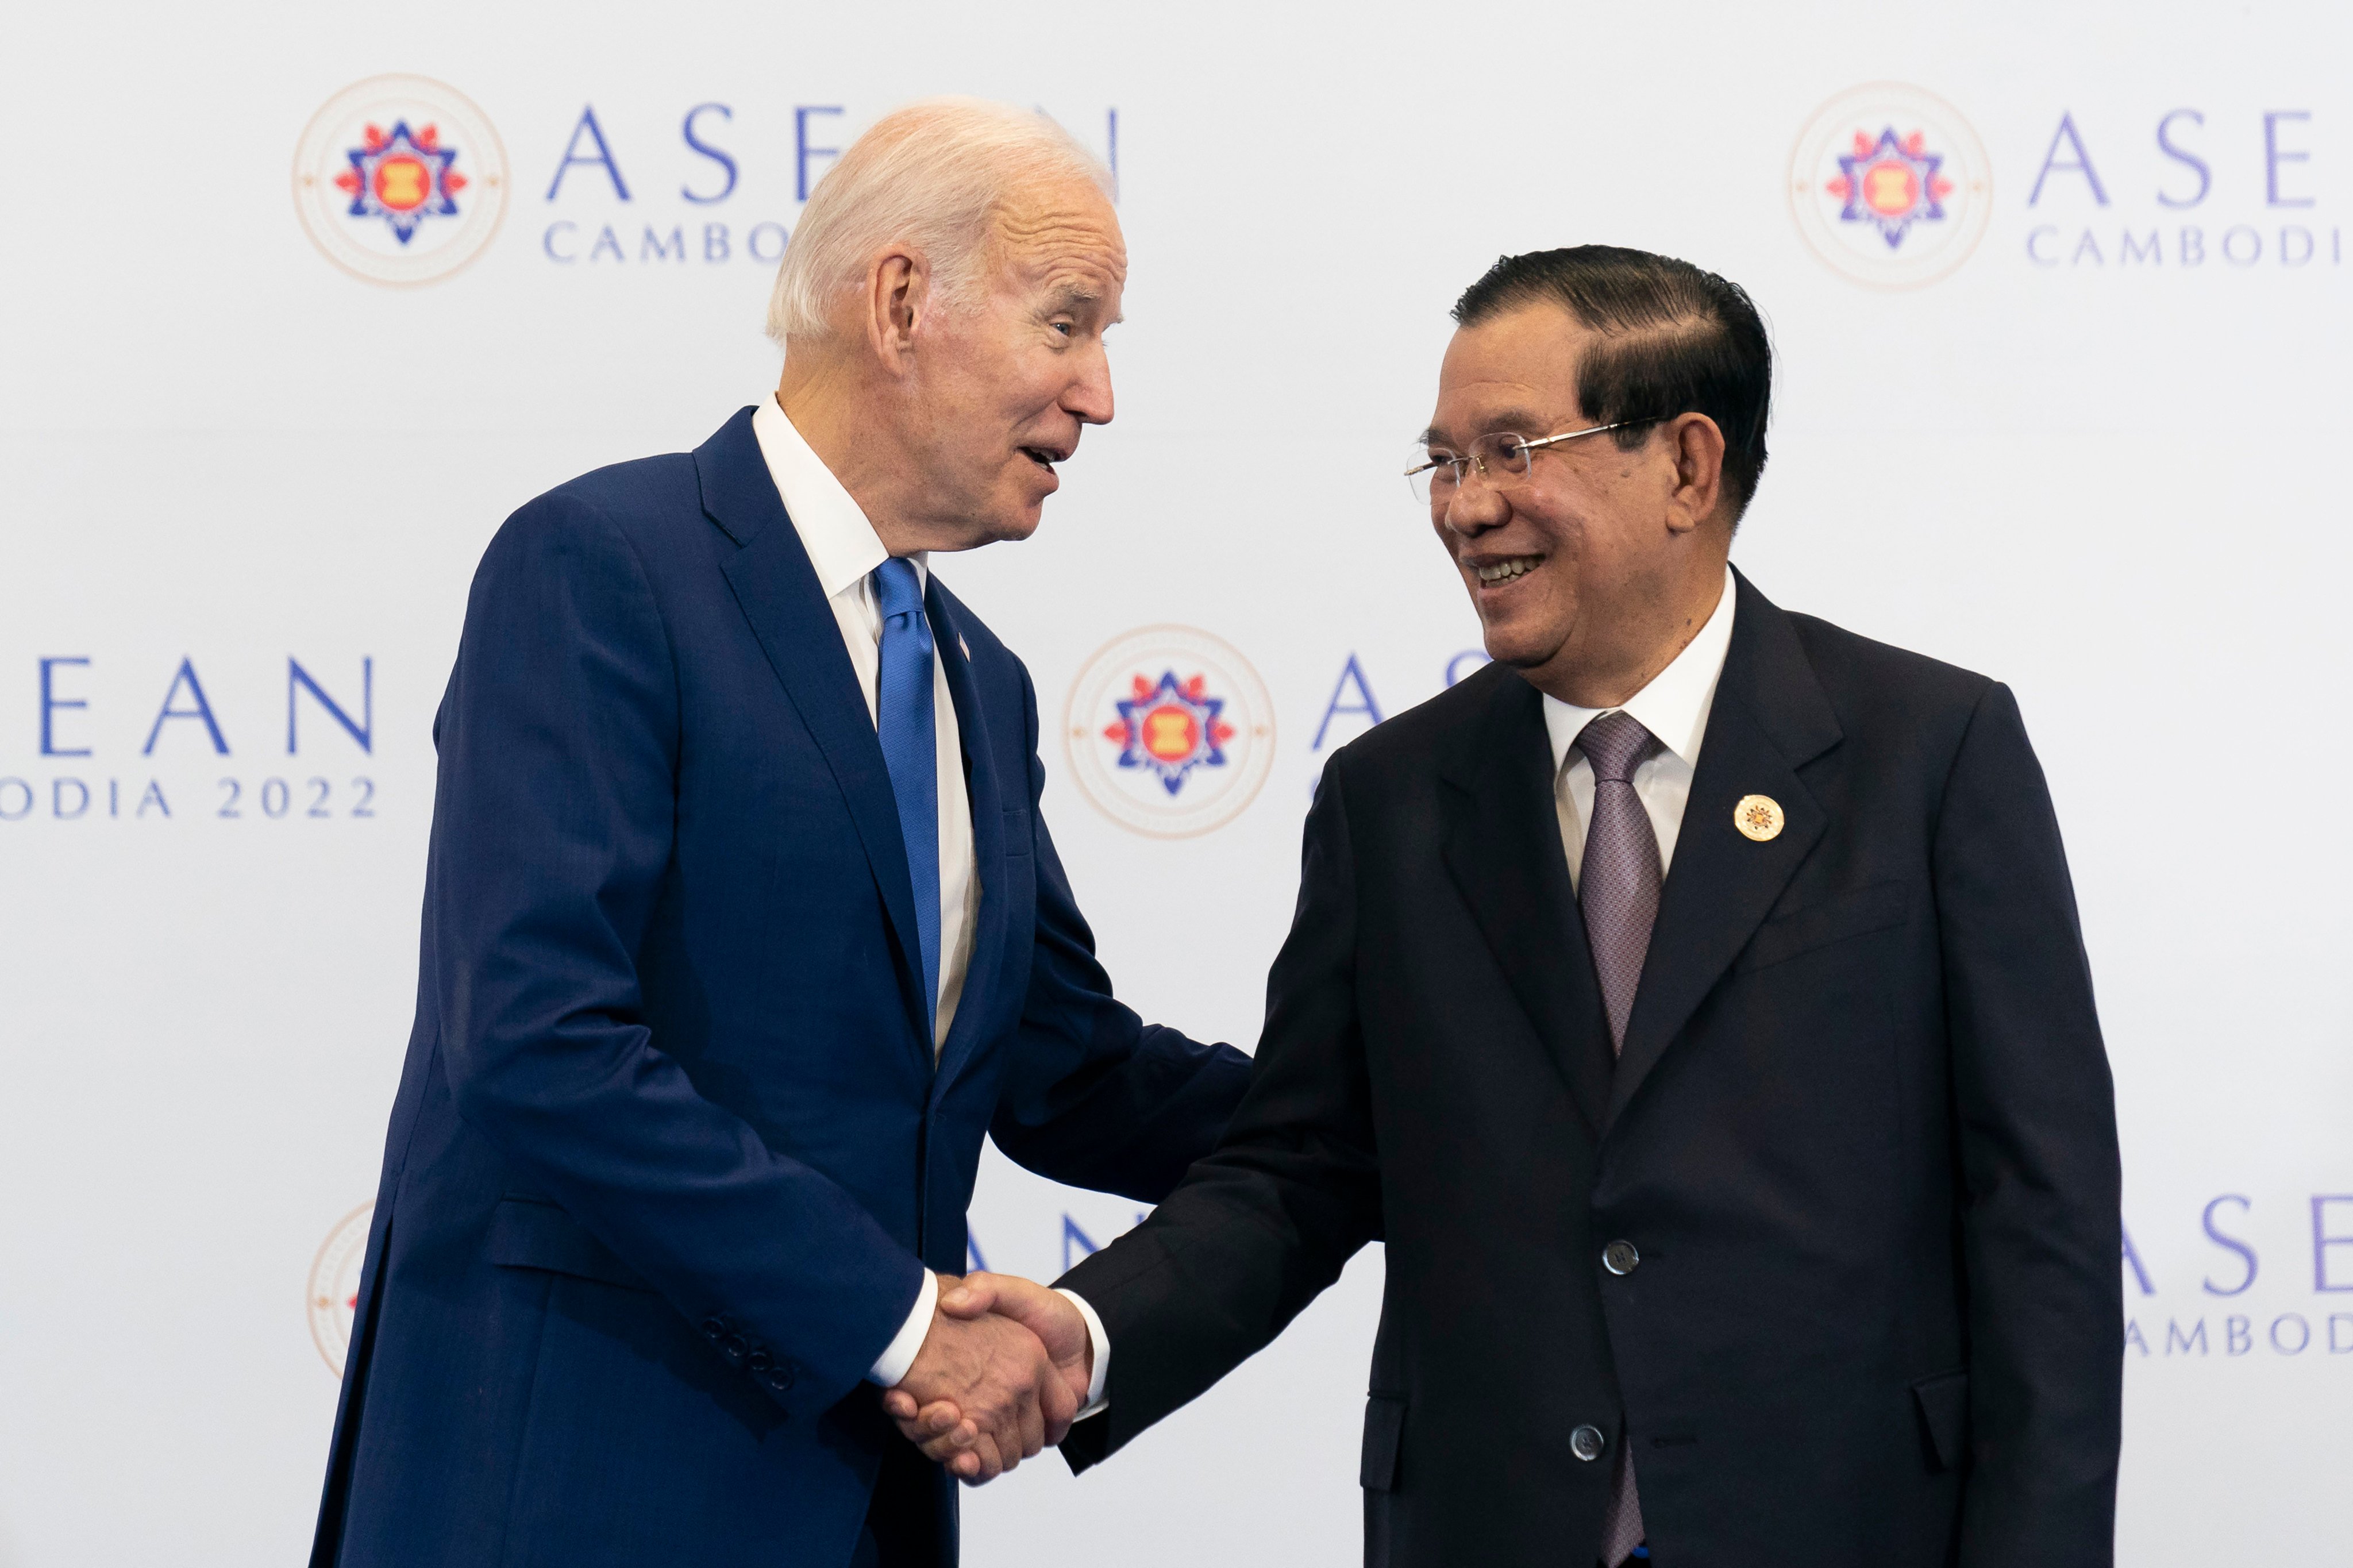 US President Joe Biden shakes hands with Cambodian Prime Minister Hun Sen before their meeting at November’s Asean summit in Phnom Penh. Photo: AP